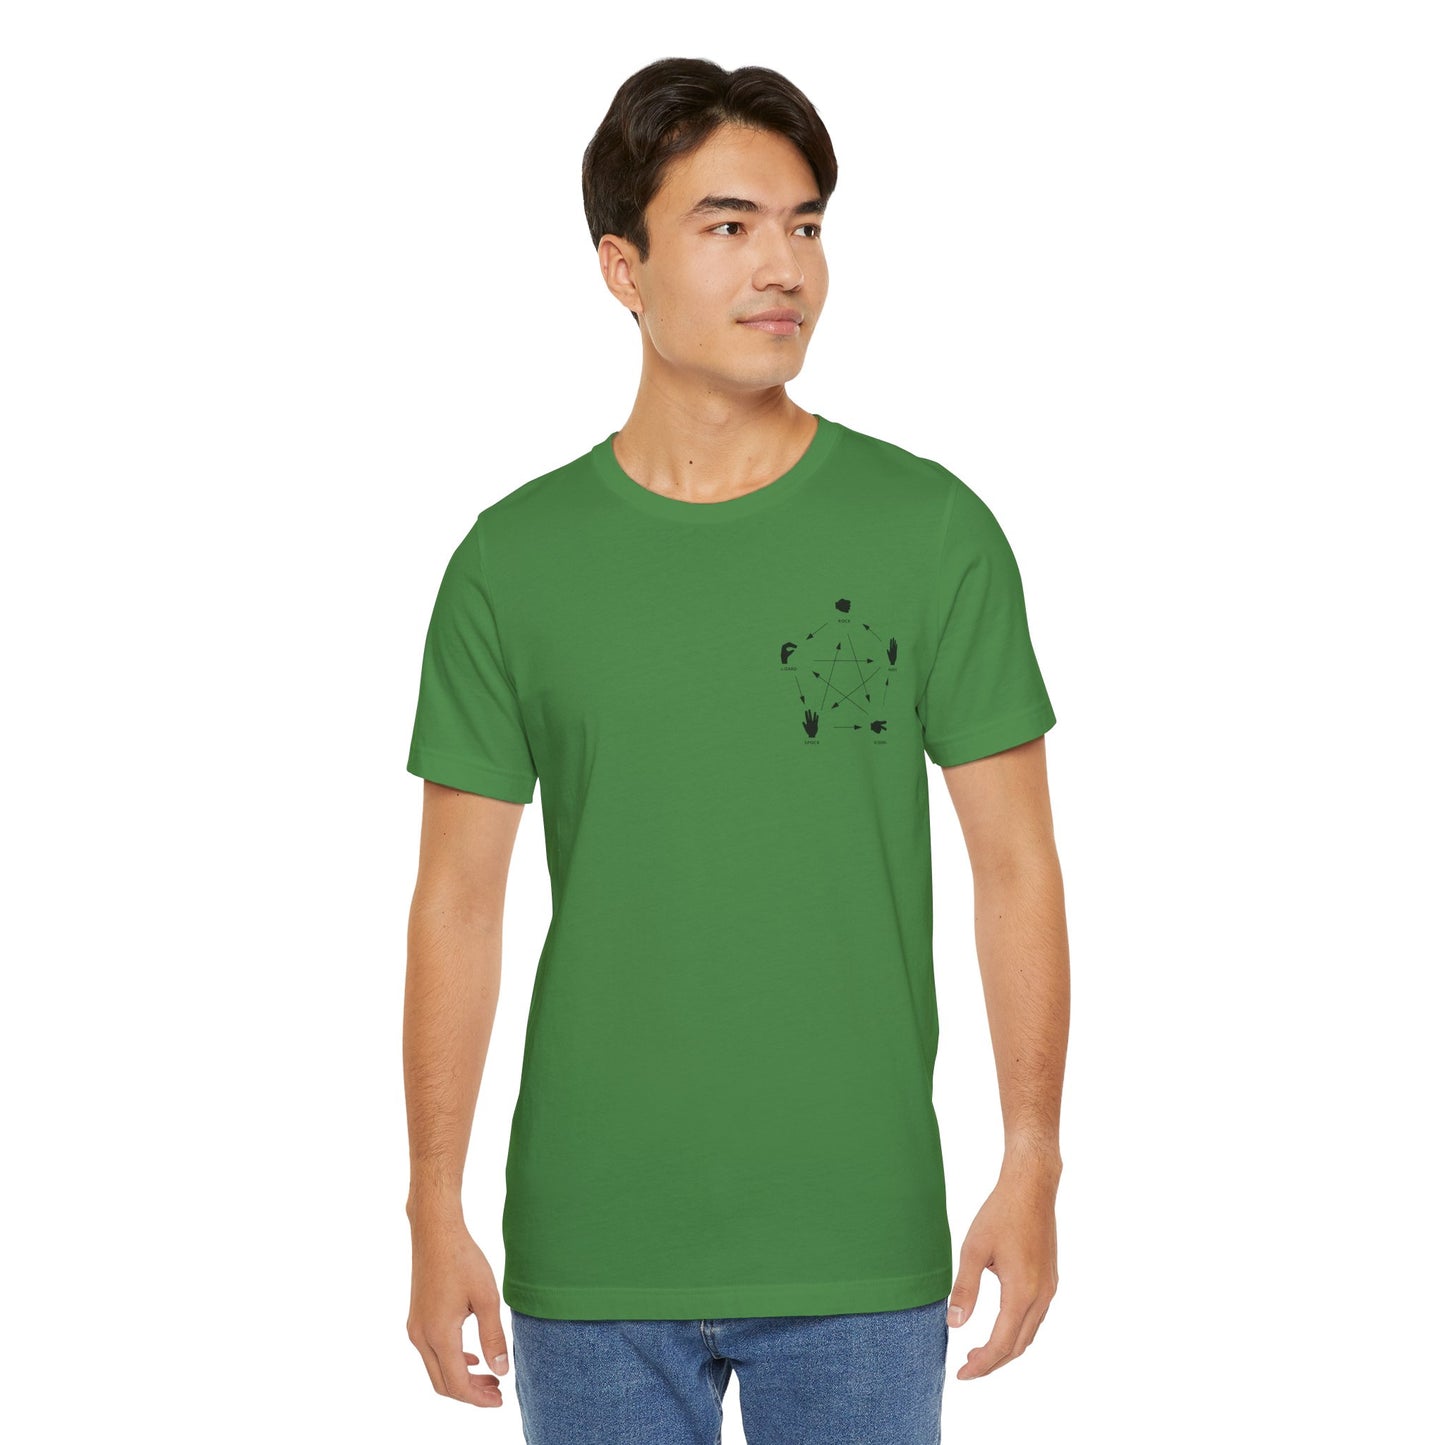 Rock Paper Scissors Lizard Spock T-shirt - Big Bang Theory